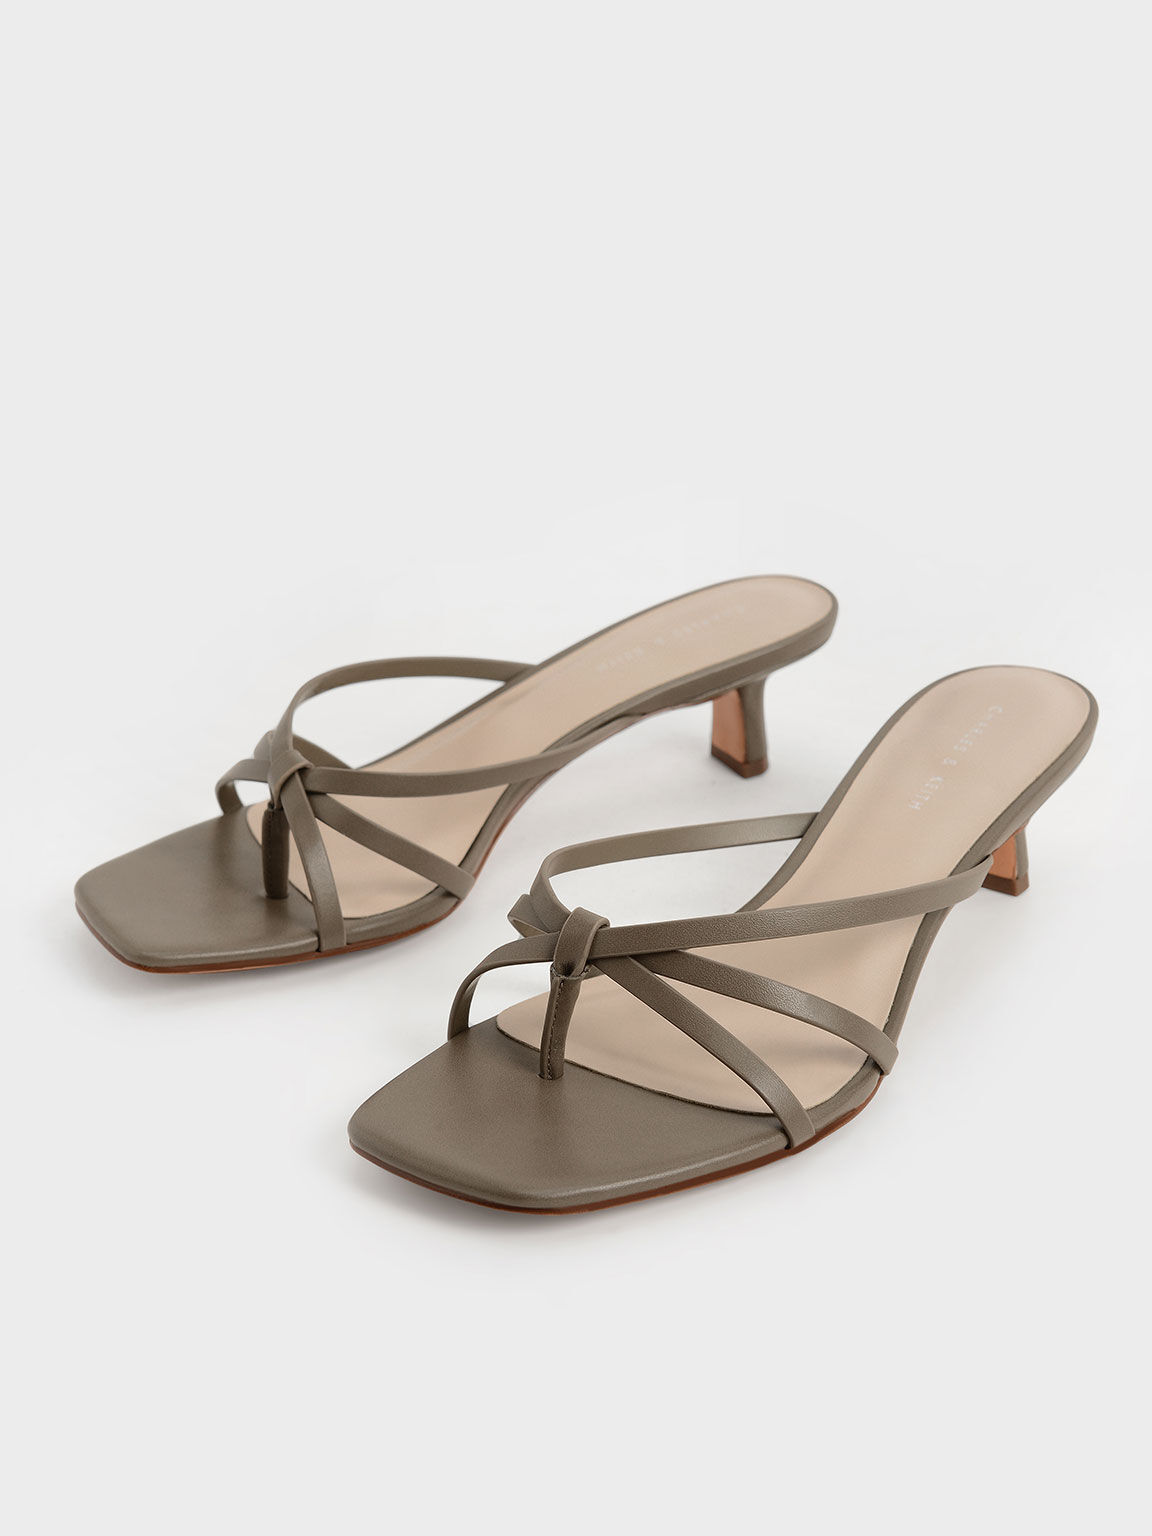 Strappy Heeled Toe-Loop Sandals, Olive, hi-res